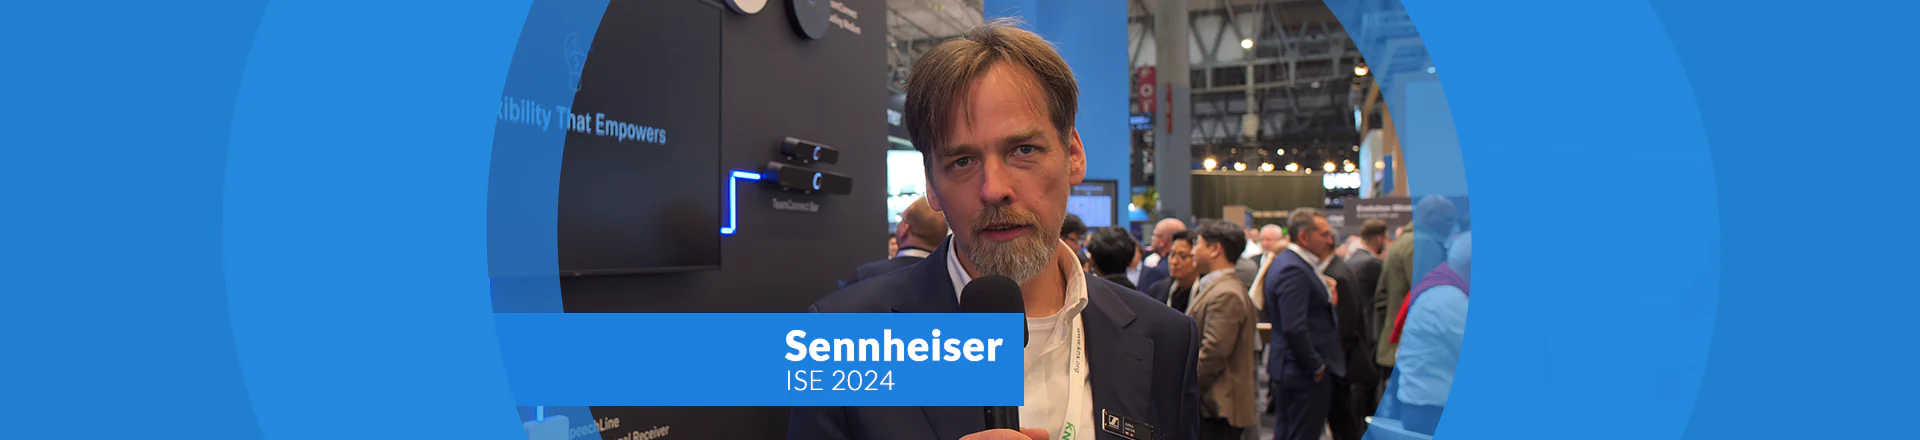 Rozwiązania konferencyjne Sennheiser na ISE 2024